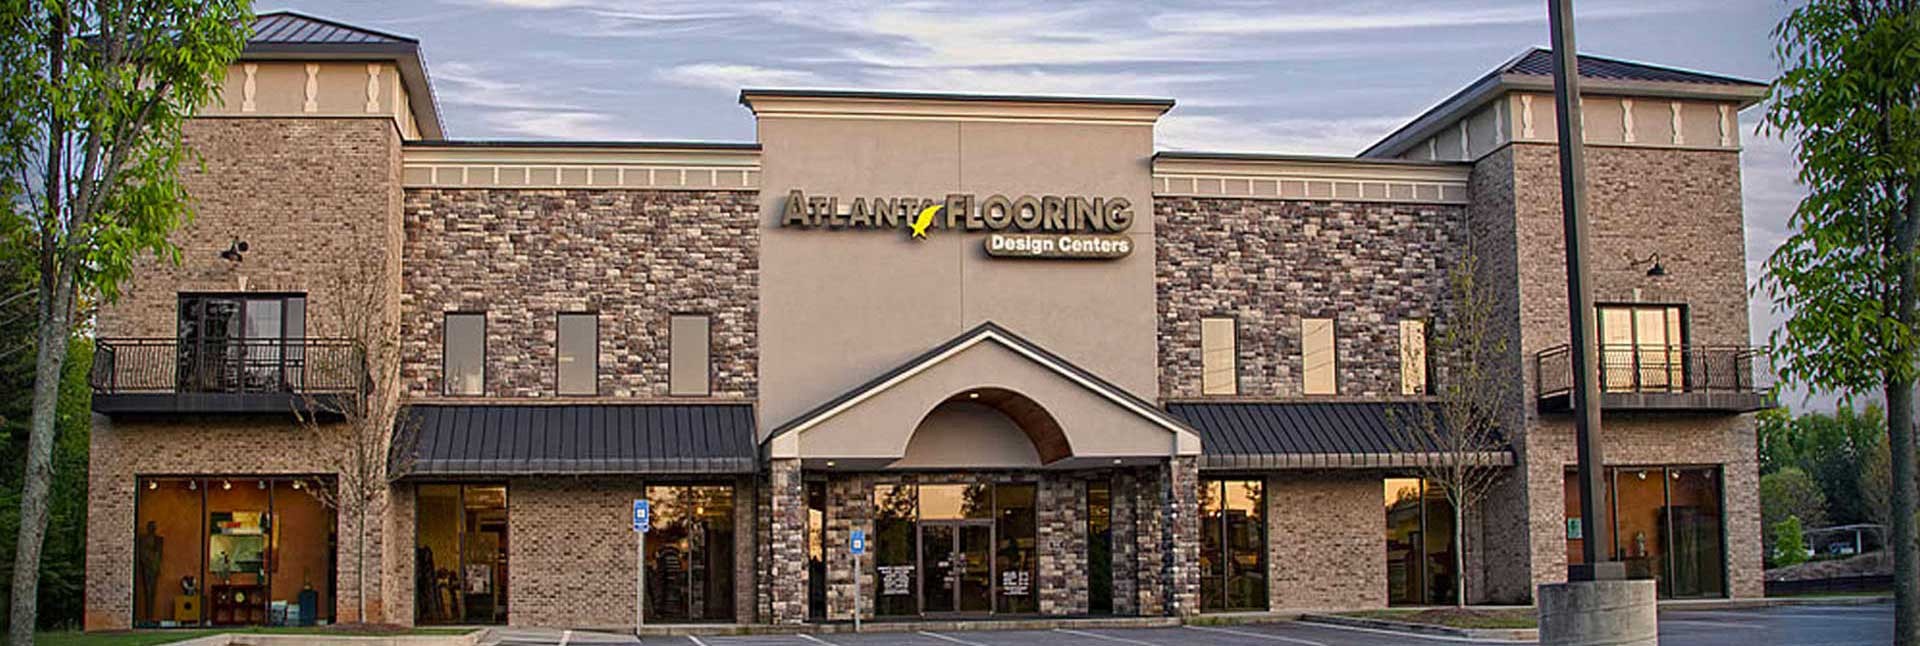 Atlanta Flooring Design Centers Inc, Atlanta Flooring Design Center Jobs